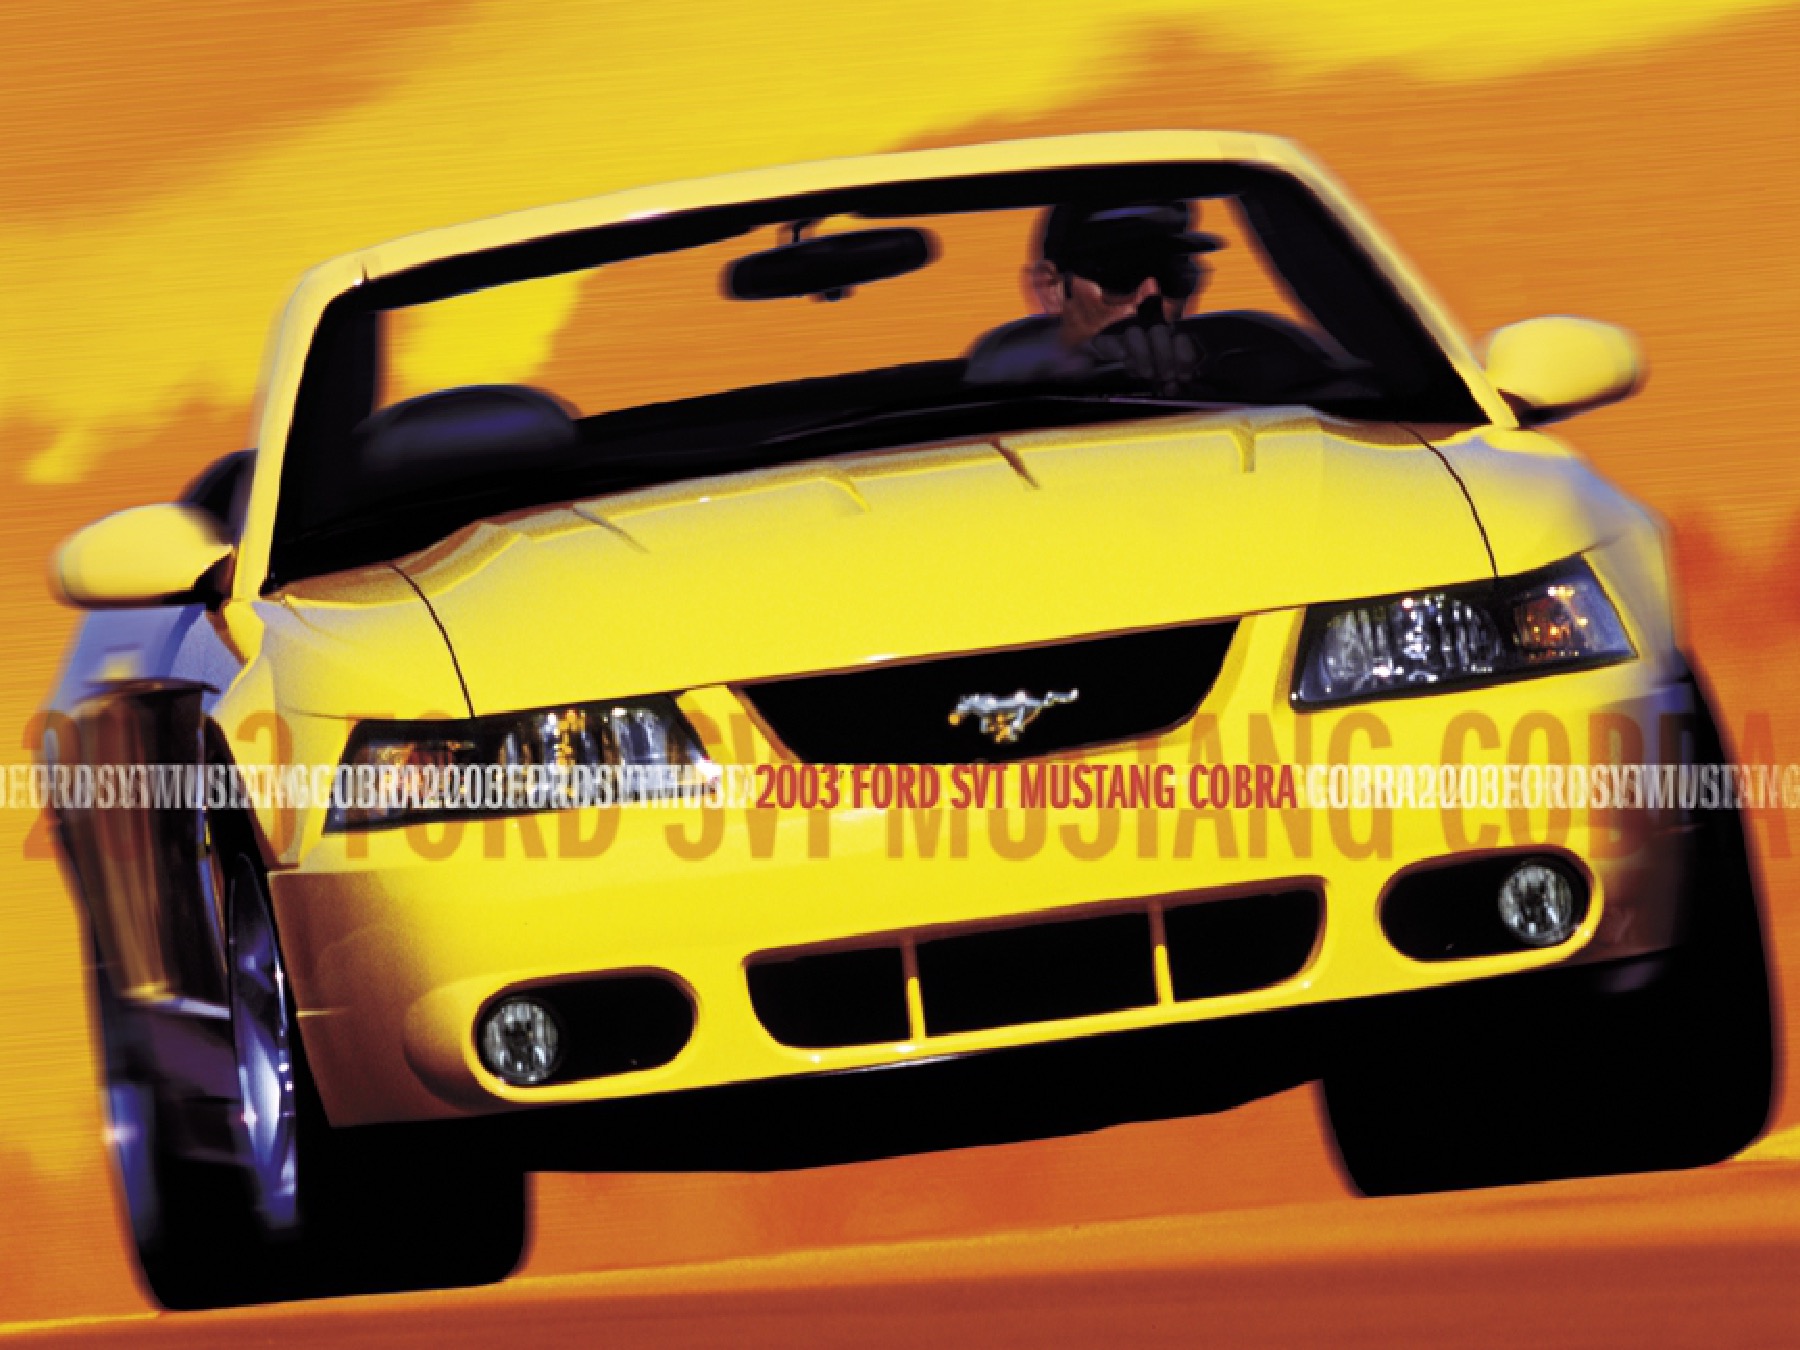 2003 Ford Mustang Cobra Brochure